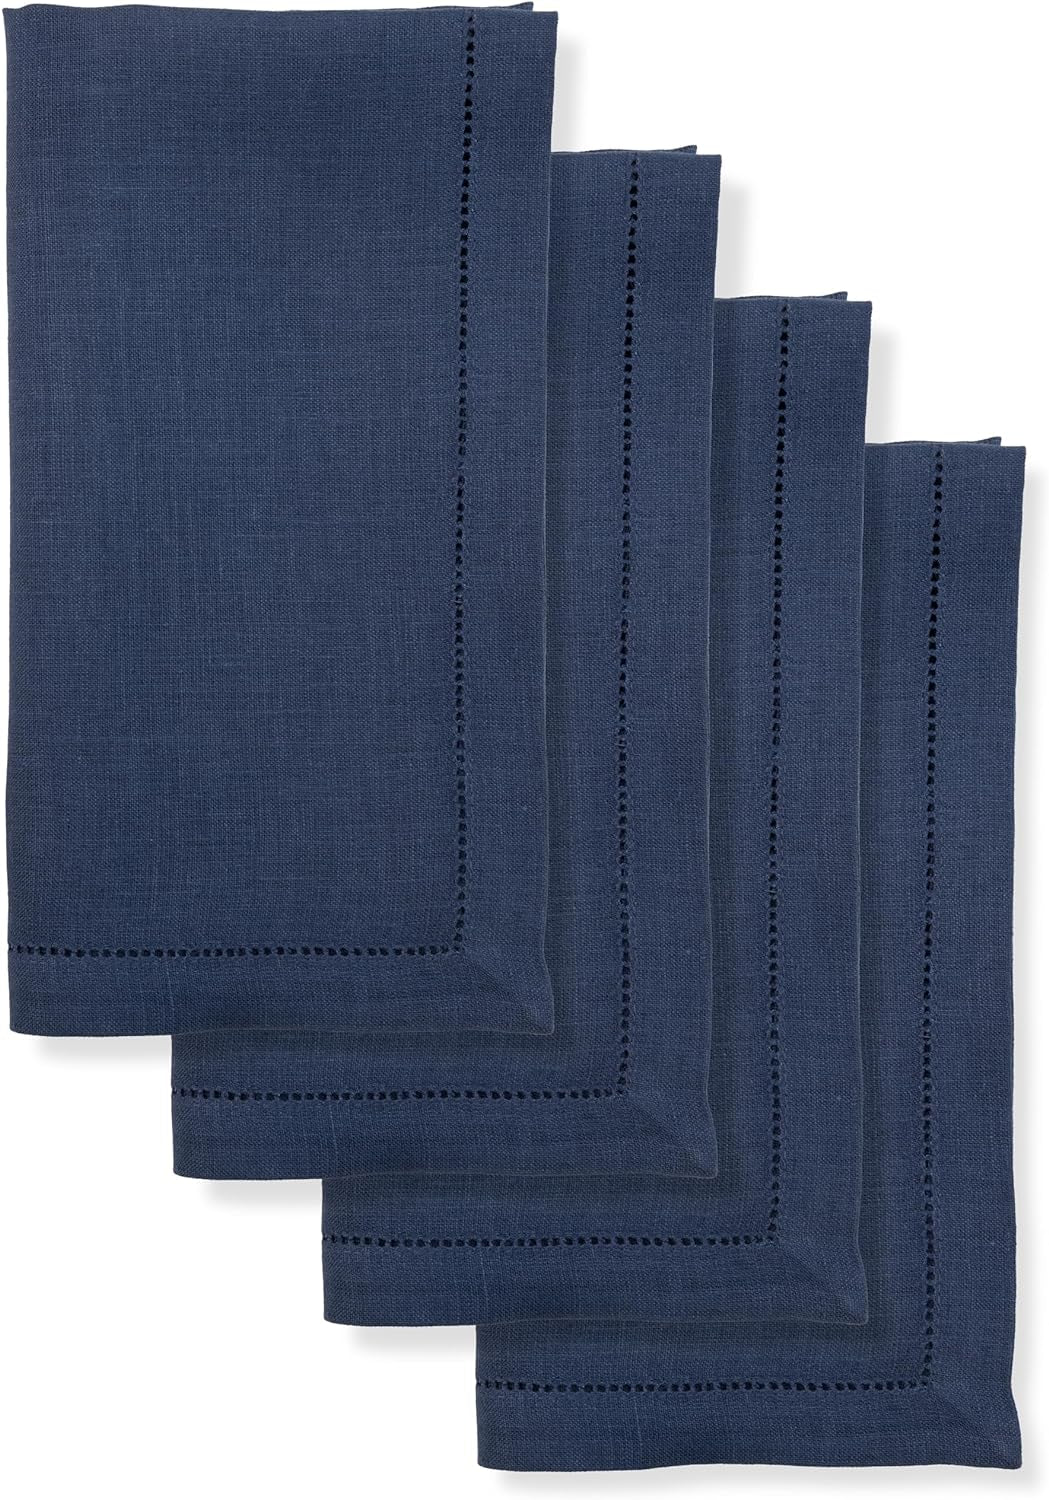 D'Moksha Homes Navy Blue Linen Napkins Set of 4-20 X 20 Inch, 100% Pure Linen, Classic Hemstitch Navy Cloth Napkins, Blue Cloth Napkins, Spring Napkins Cloth - Easy Care Machine Washable